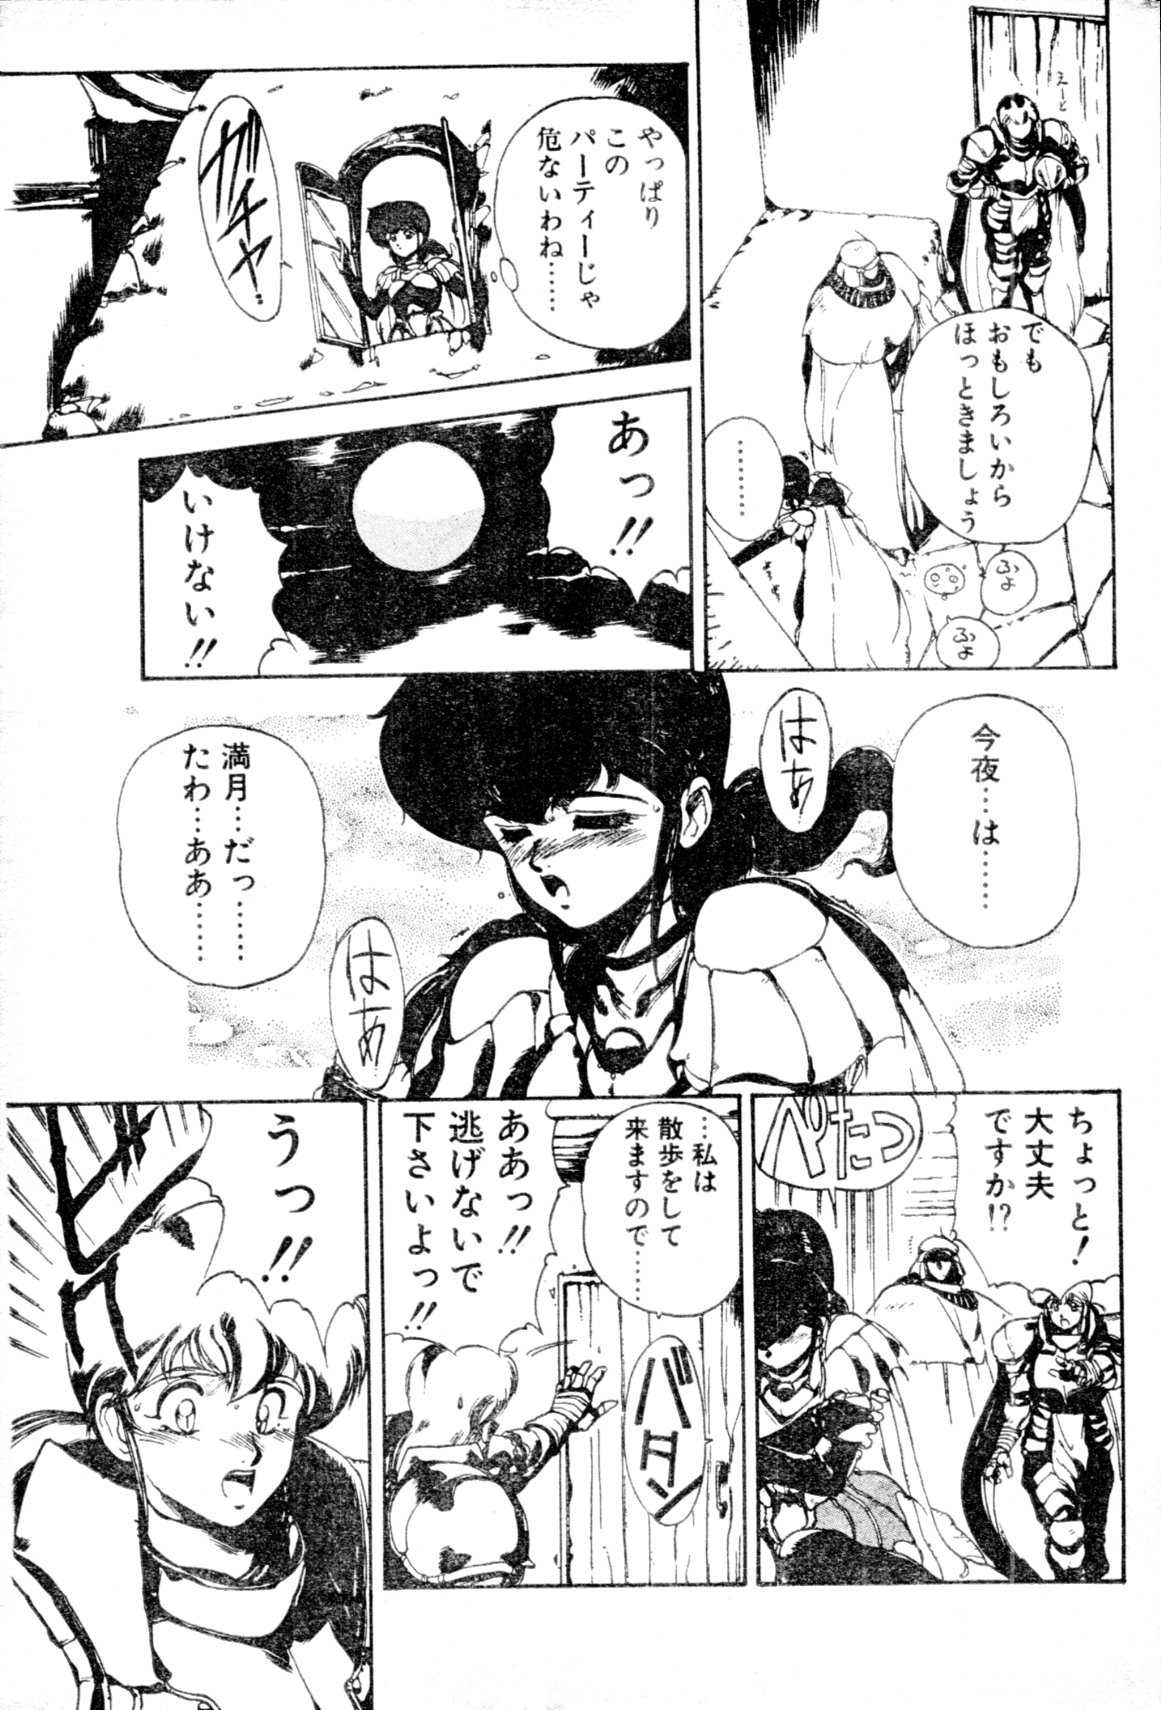 COMIC Penguin Club Sanzokuban 1991-12 NARCIS3 [雑誌] COMIC ペンギンクラブ山賊版 1991年12月号増刊 NARCIS3 幻超二&amp;飛龍乱特集号